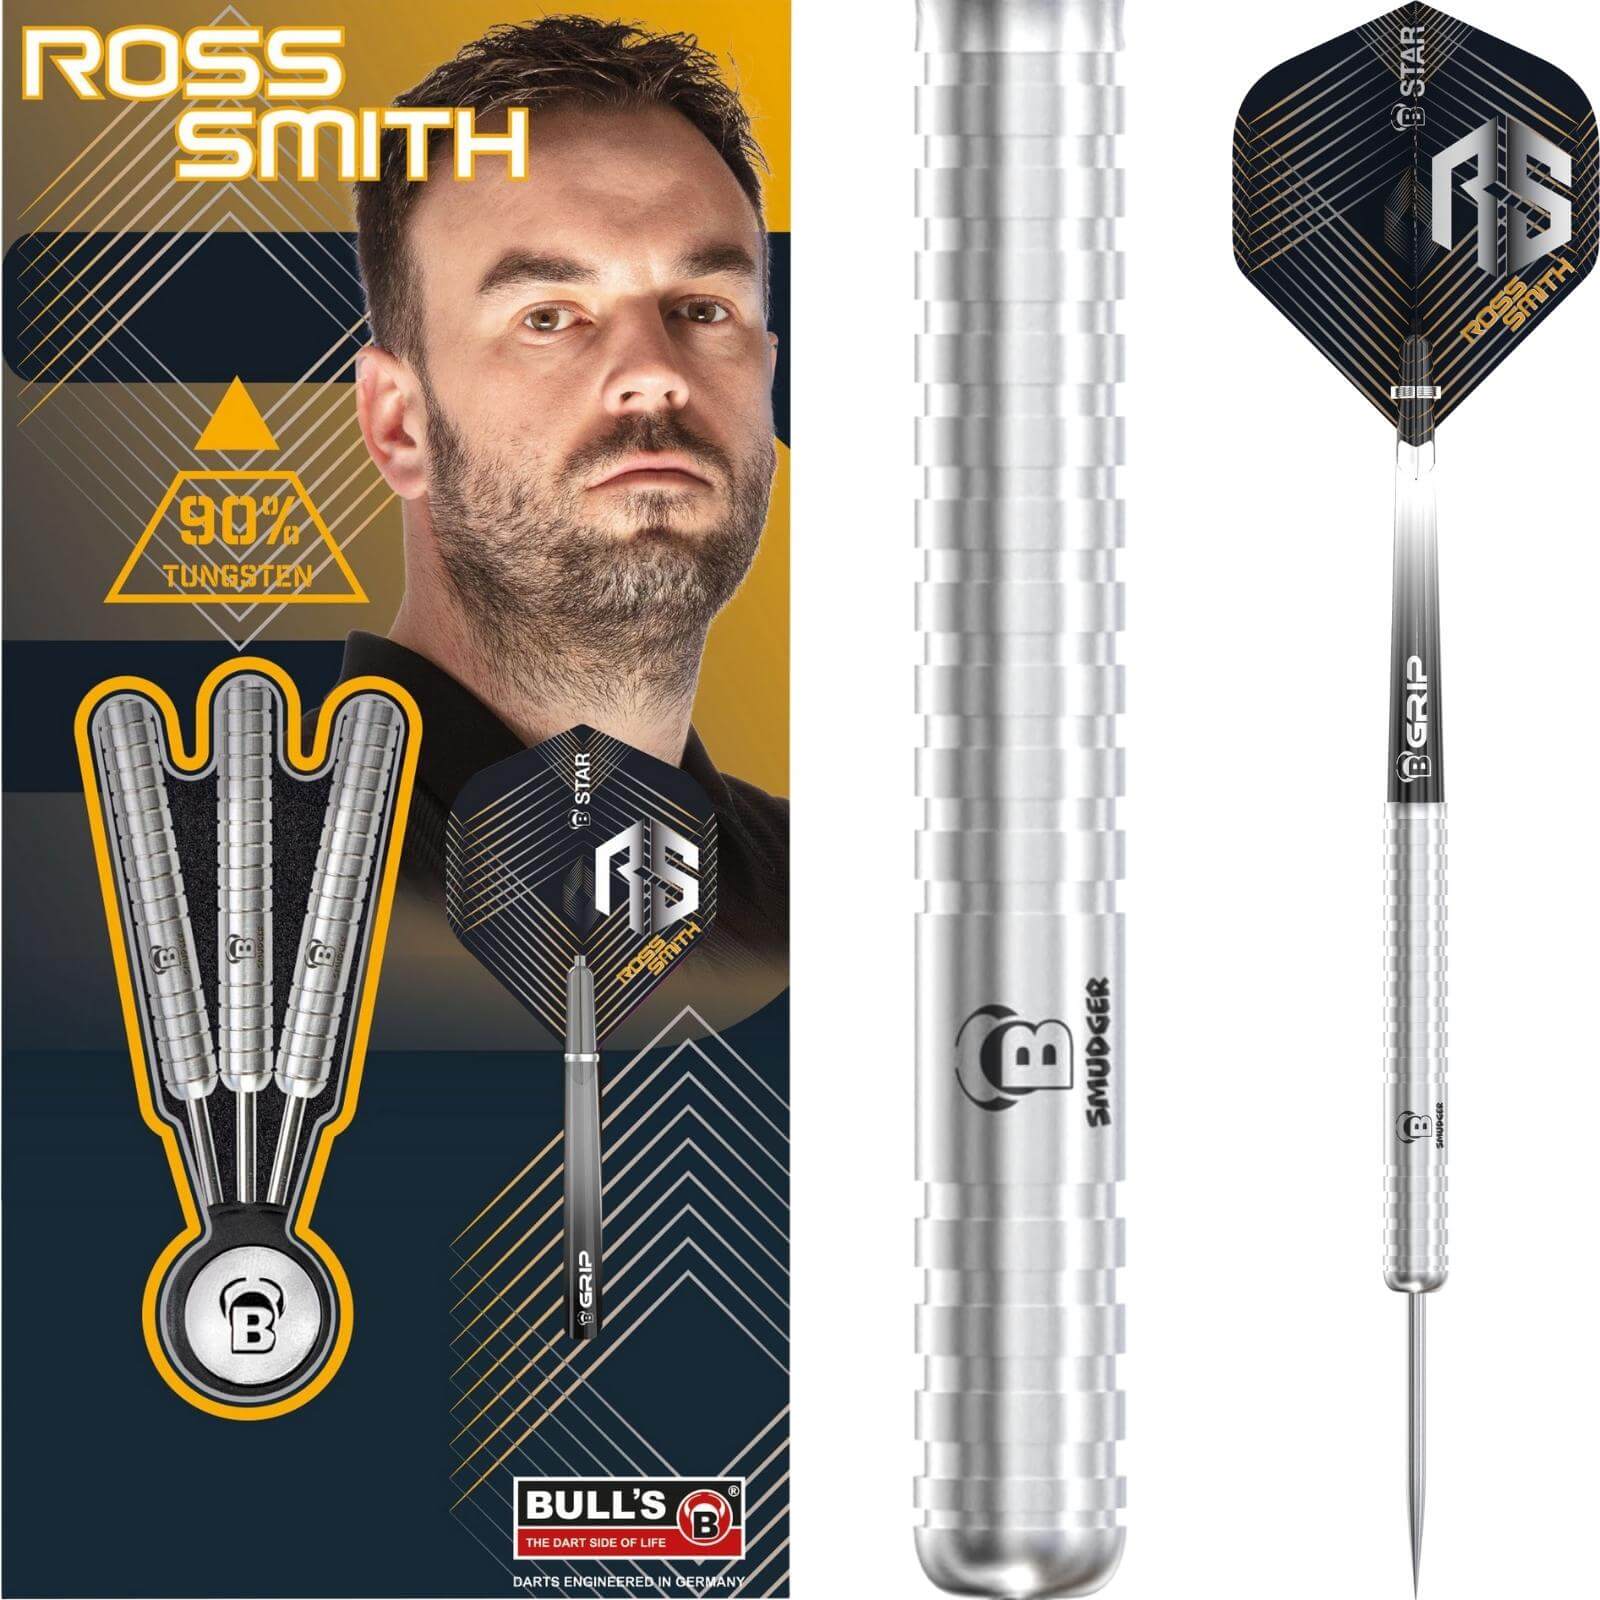 Darts - BULL'S - Ross Smith Darts - Steel Tip - 90% Tungsten - 22g 24g 